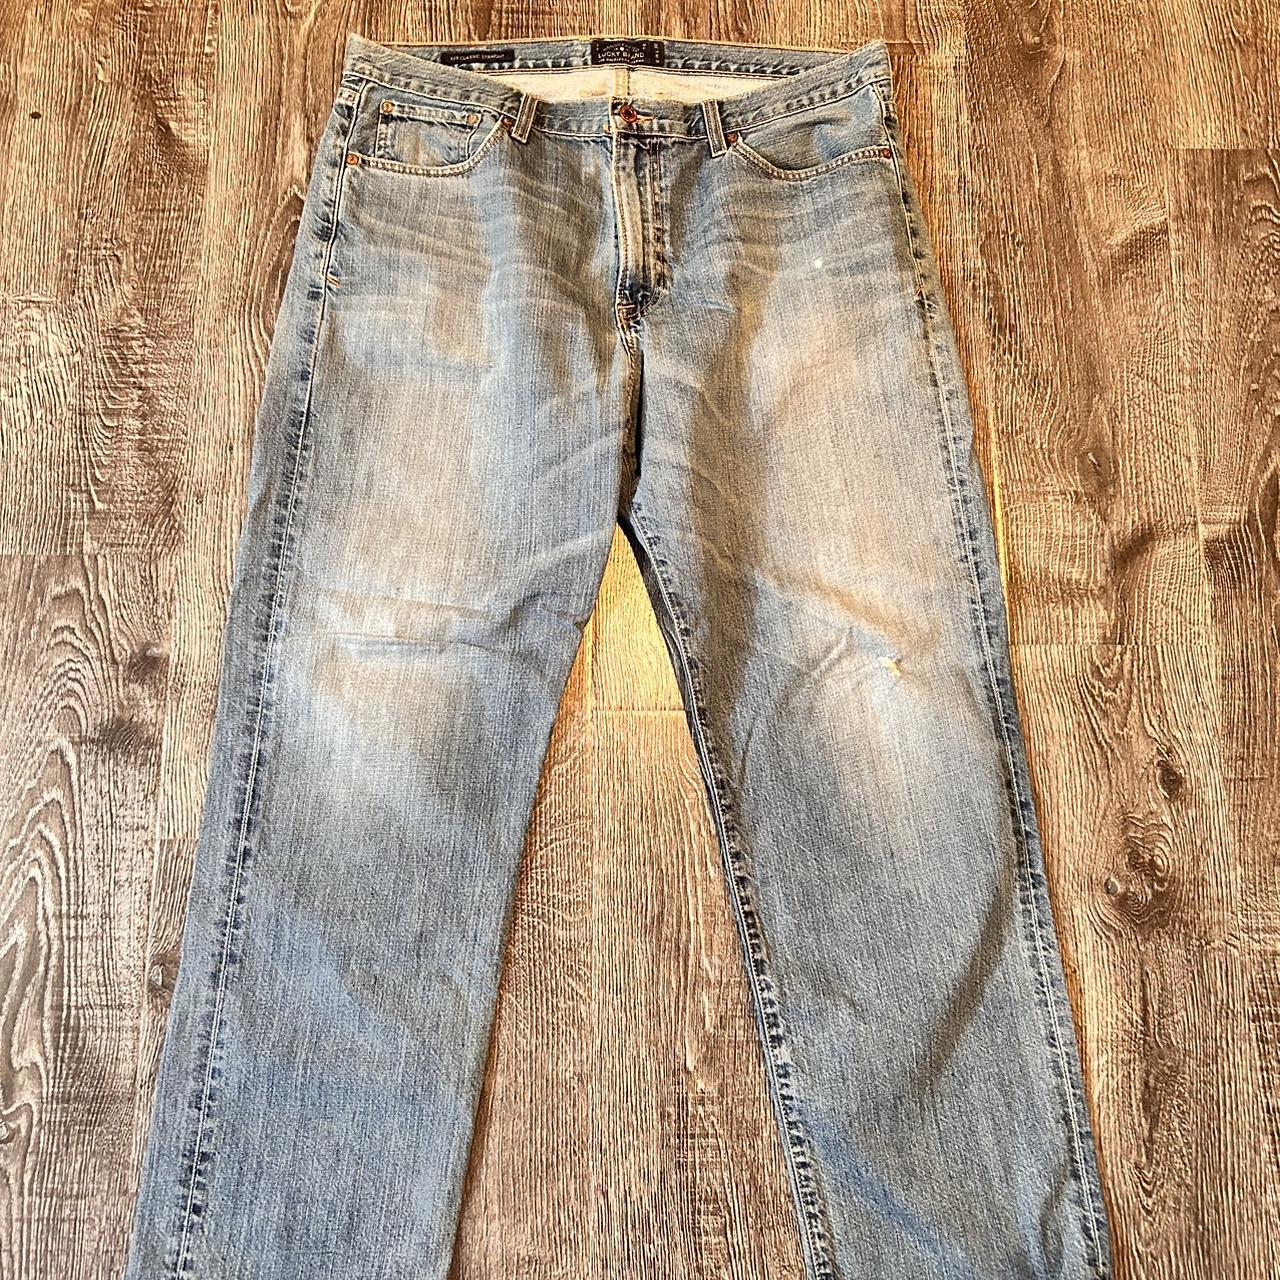 Vintage lucky brand jeans -36x30 -leg... - Depop